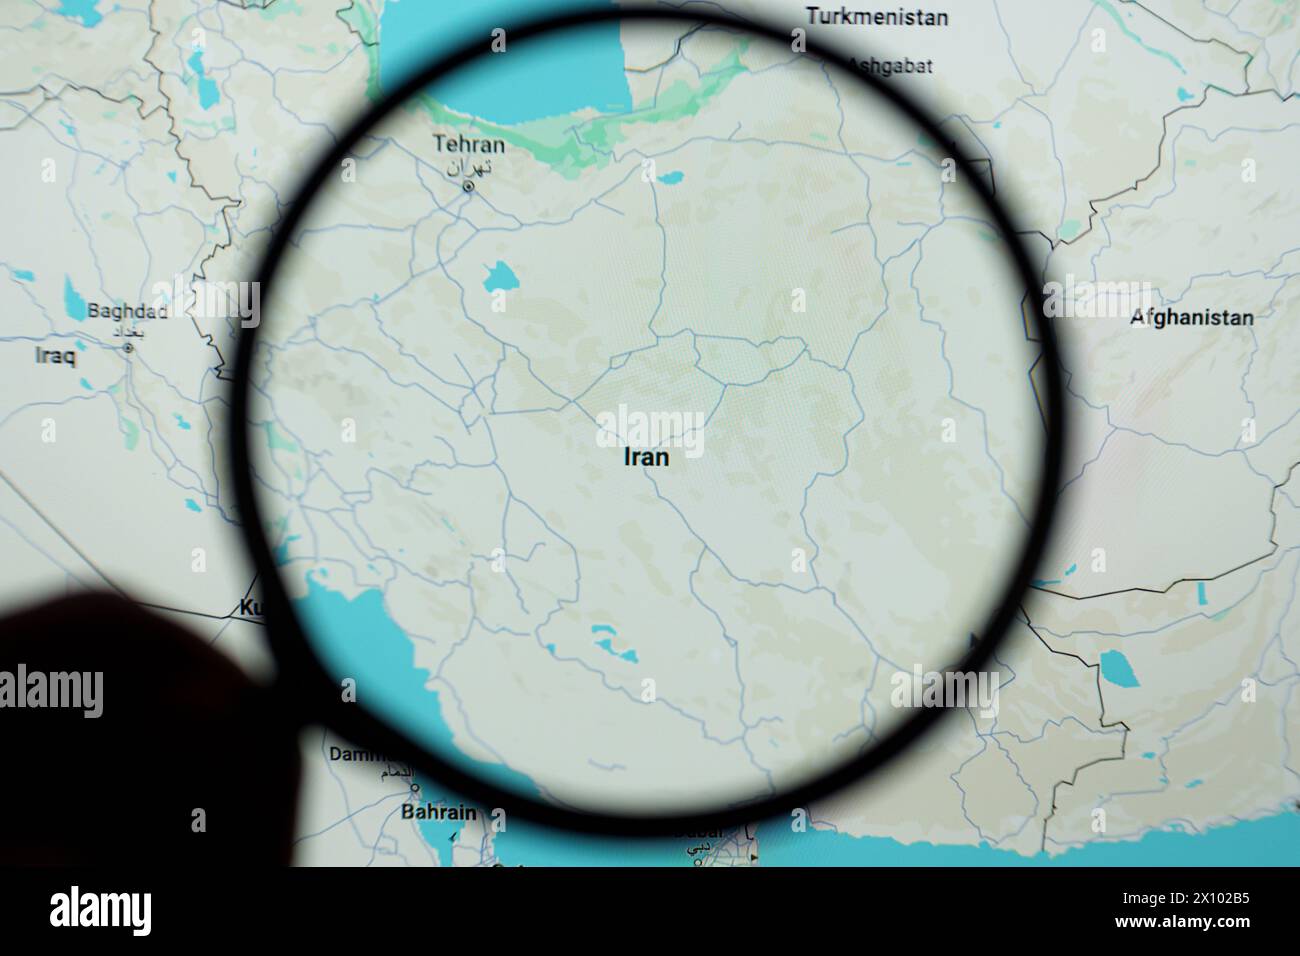 Iran islamische republik Land auf Google Political Map Stockfoto